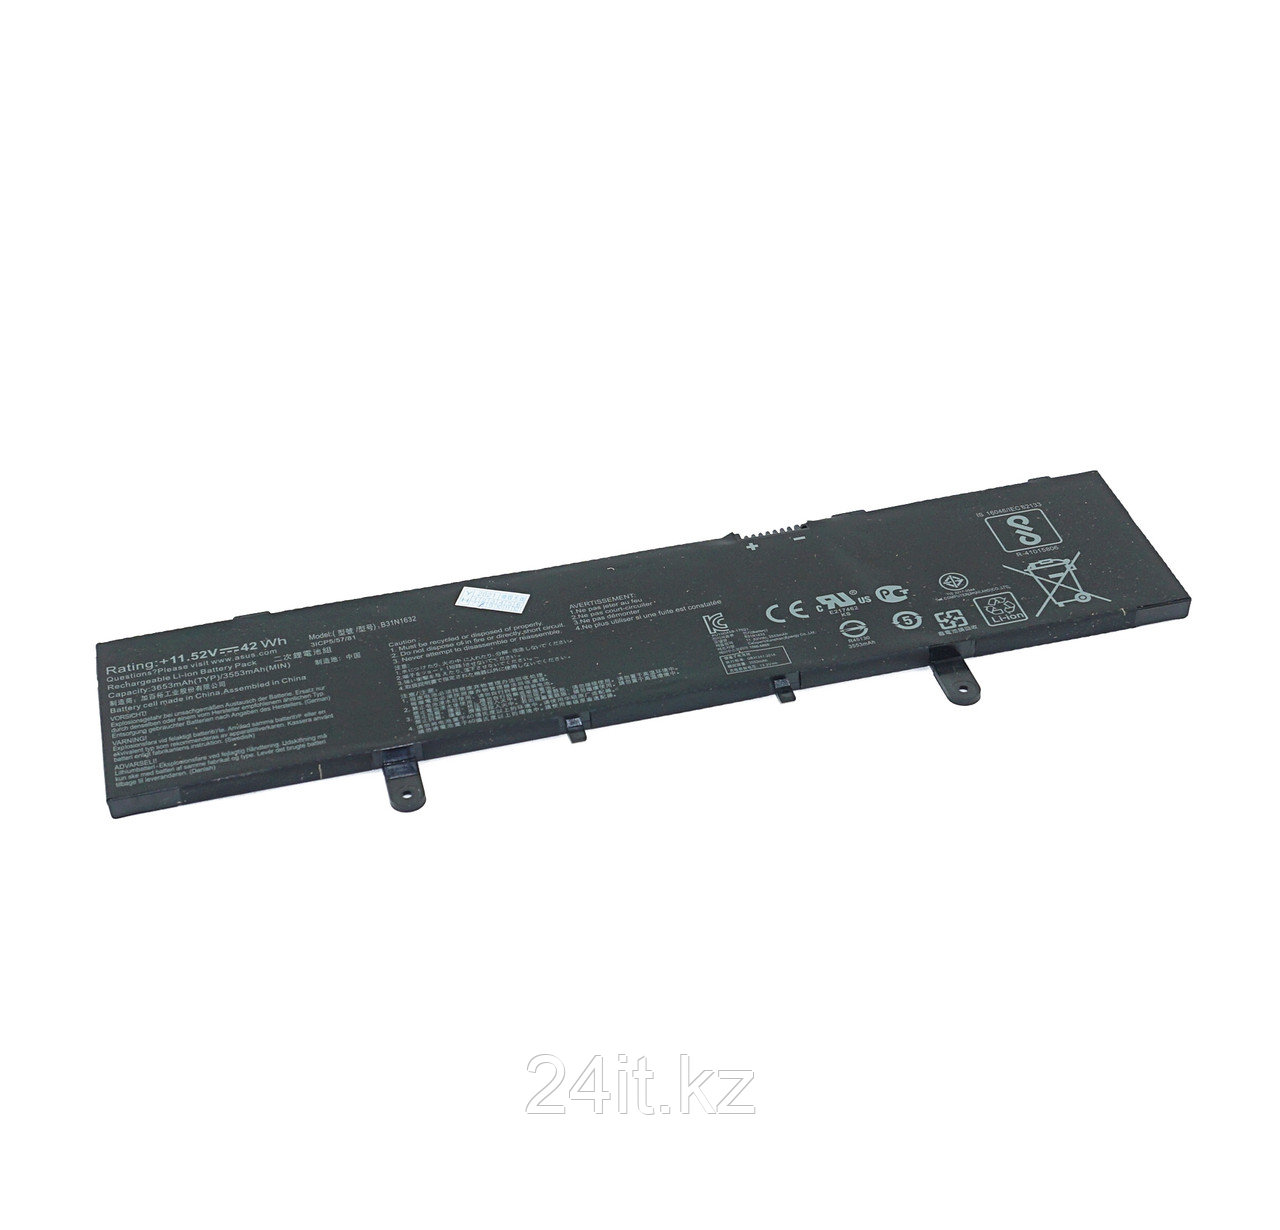 Аккумулятор B31N1632 для ноутбука Asus VivoBook 14 X405, 11.52V, 3550mAh -ОРИГИНАЛ